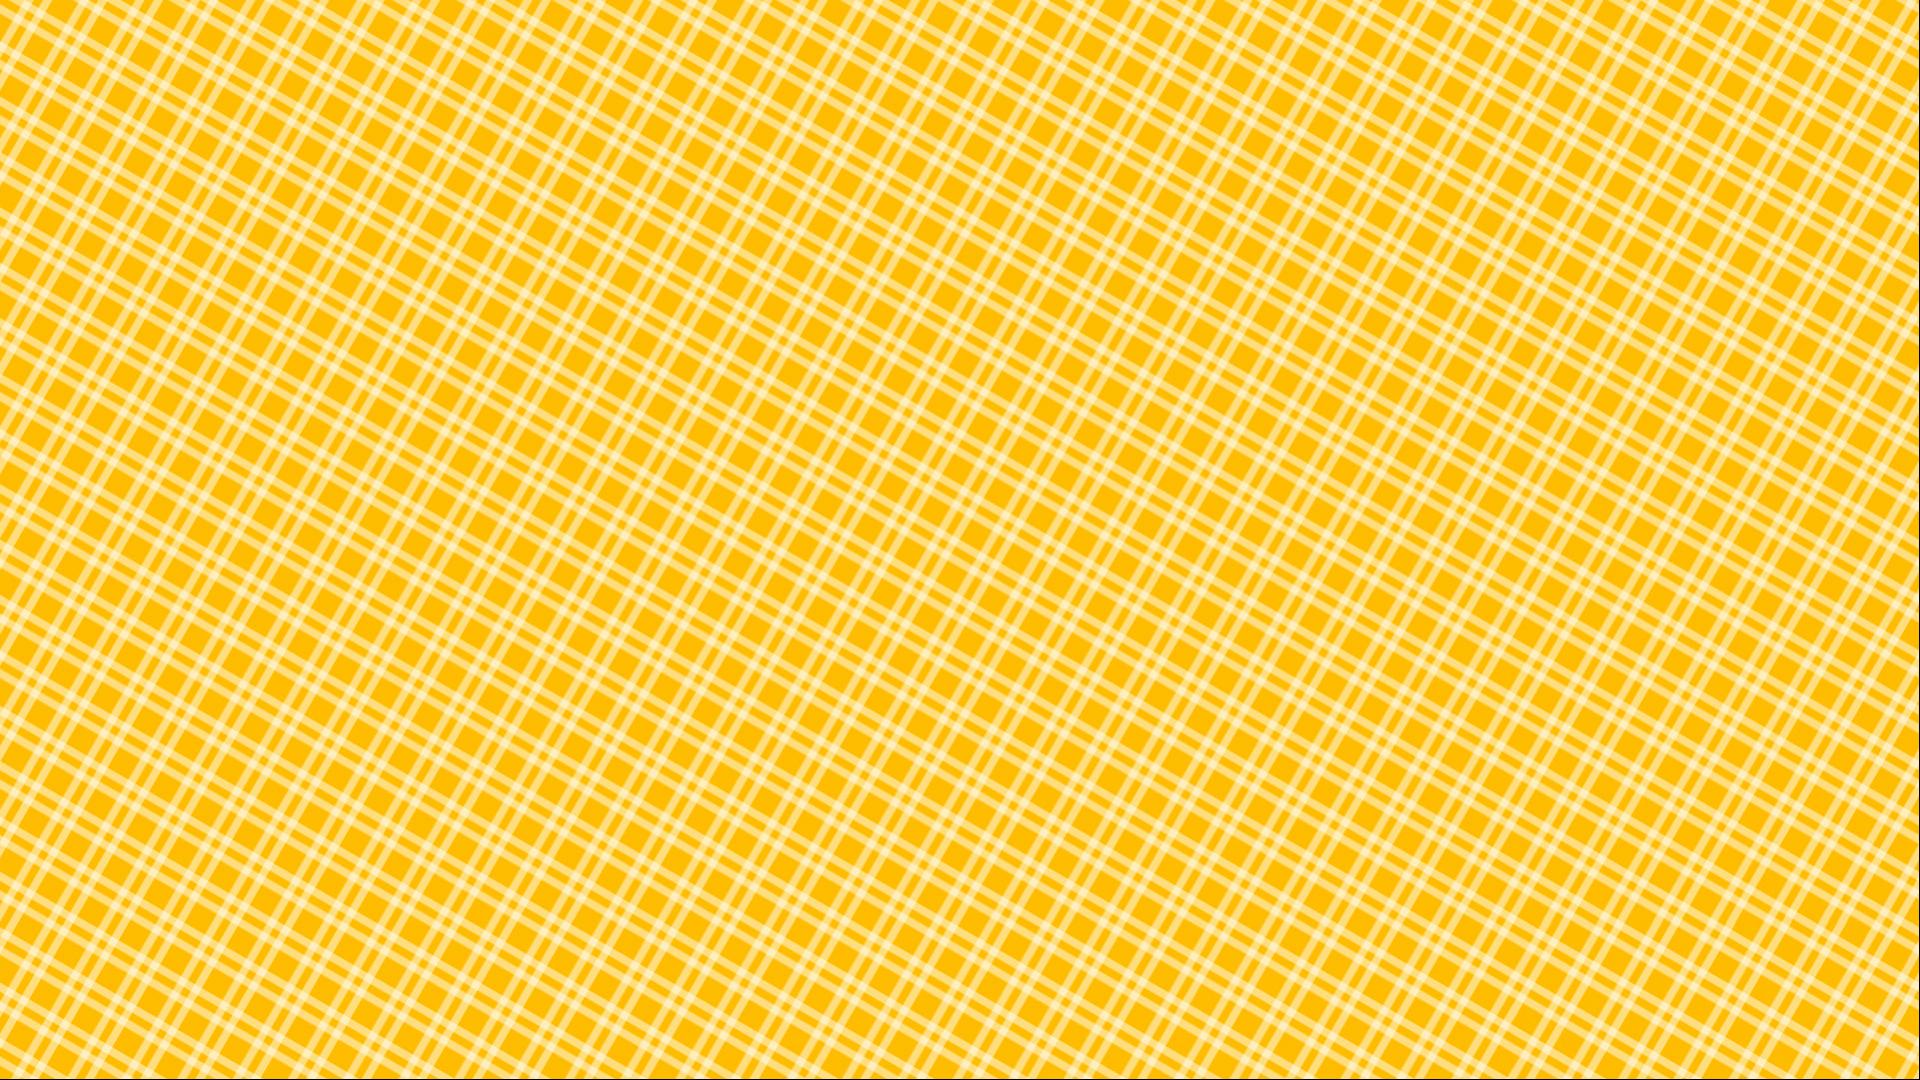 Yellow Mustard Wallpaper 17 0f 20 with Diagonal White Lines Pattern Wallpaper. Wallpaper Download. High Resolution Wallpaper